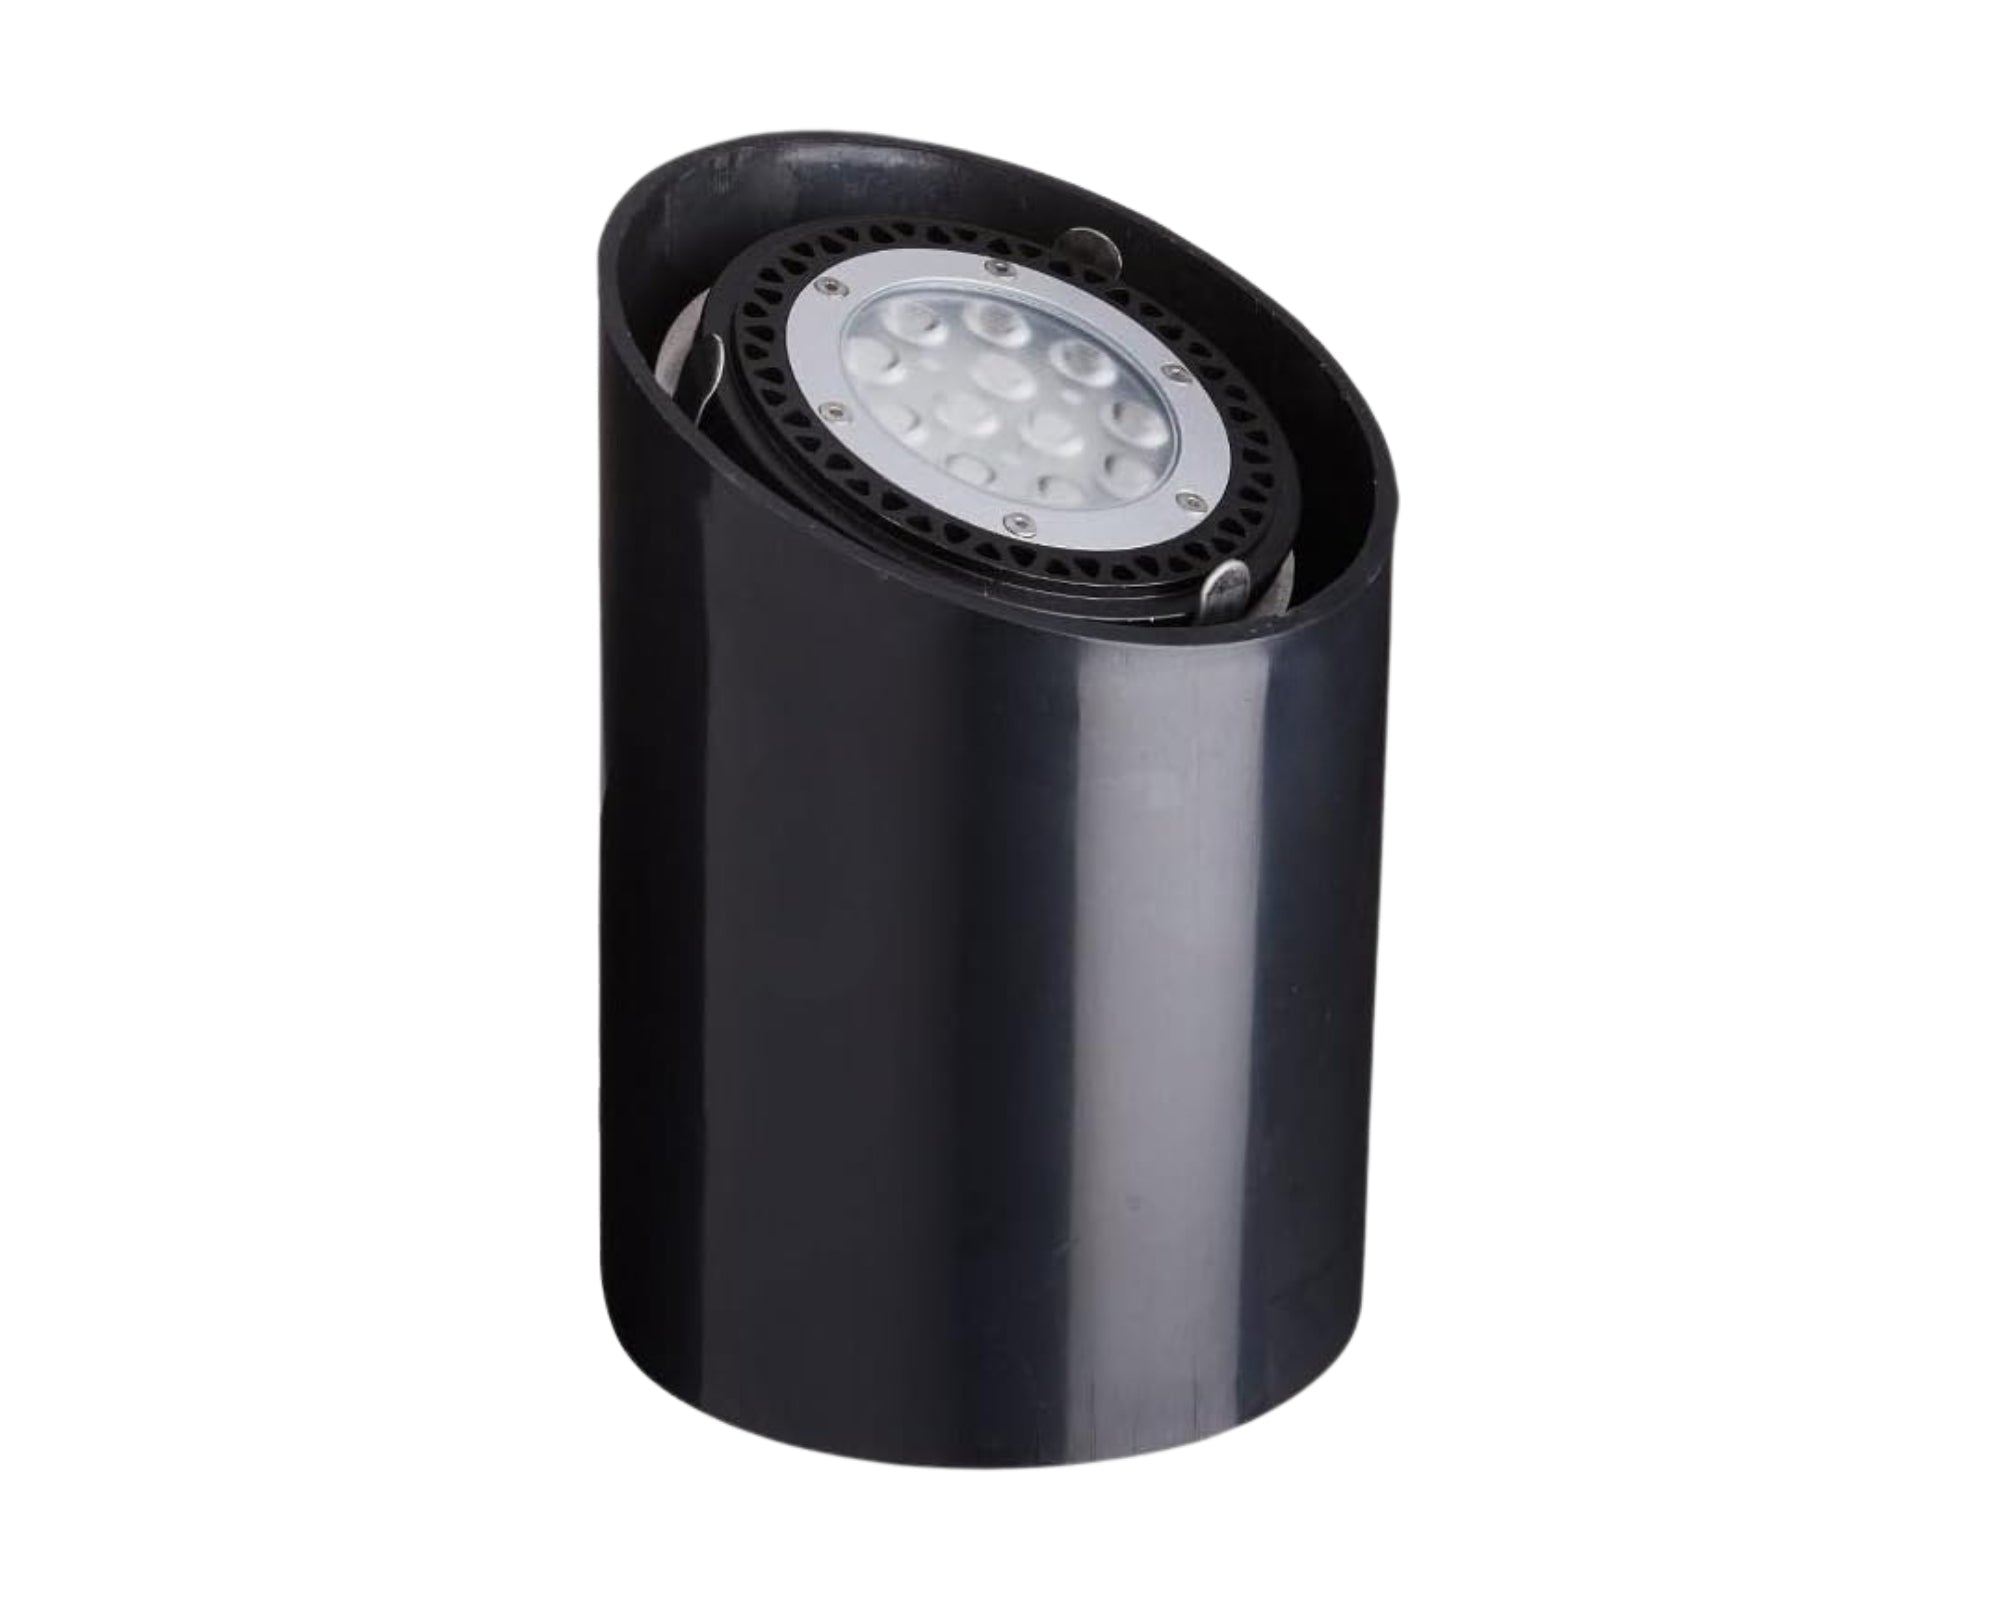 Lumina Lighting® Low Voltage Landscape Well Lights  | Adjustable Outdoor In-Ground Light (Black, 2-Pack)